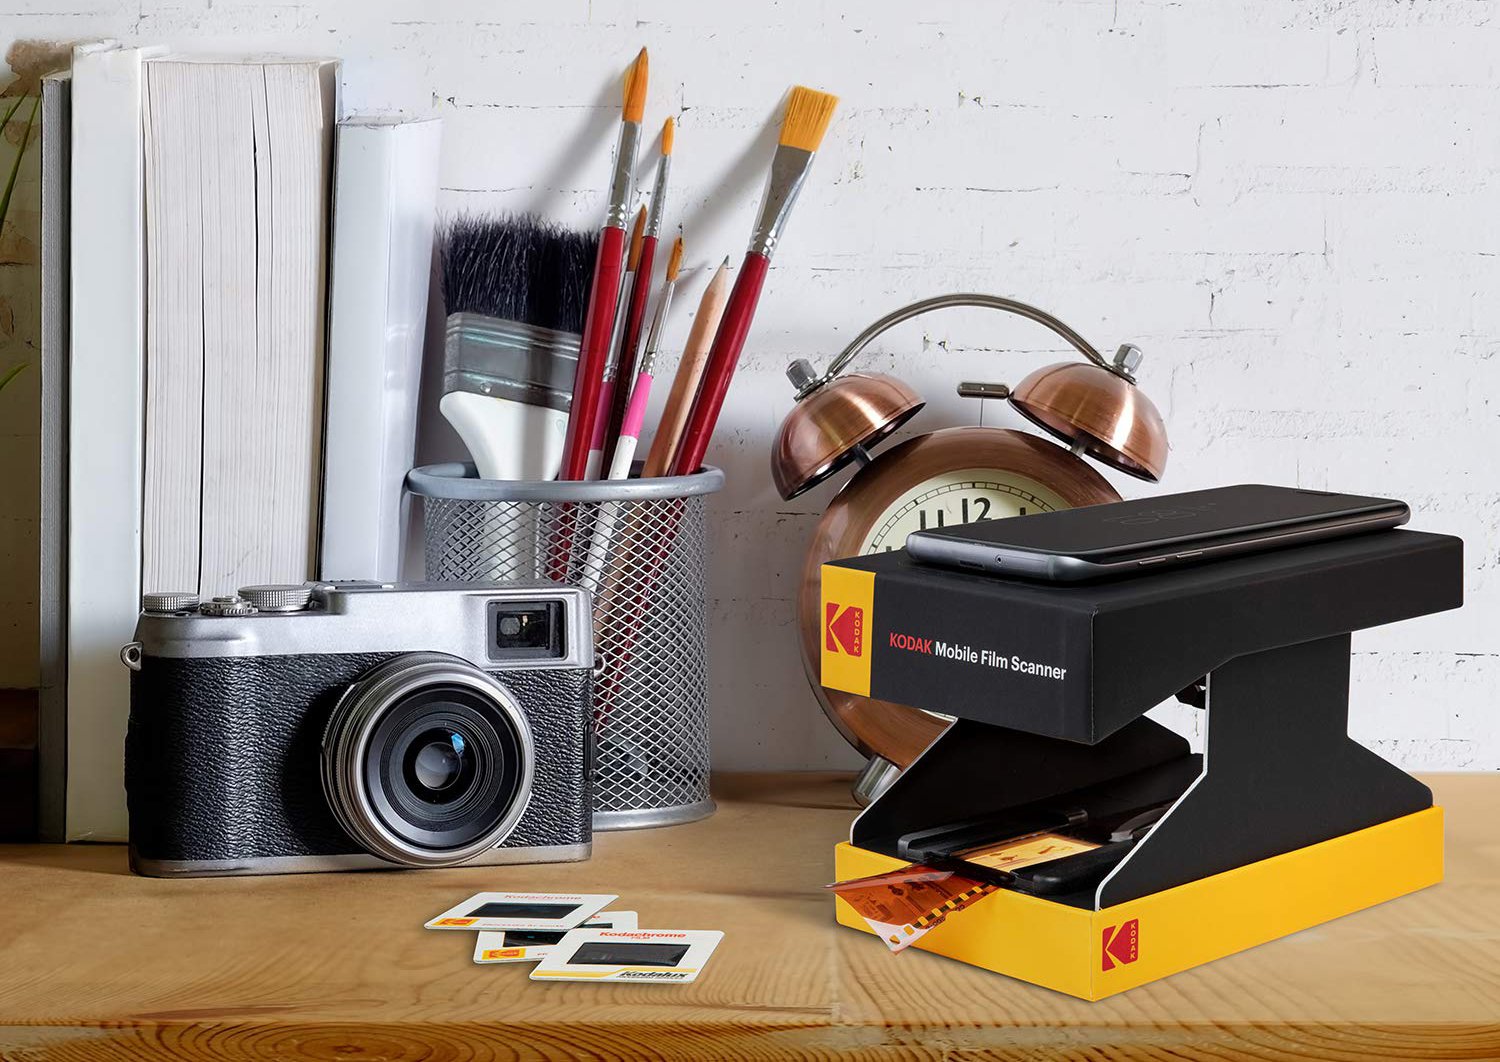 Kodak $40 Mobile Film Scanner is Like Google Cardboard for Scanning Film